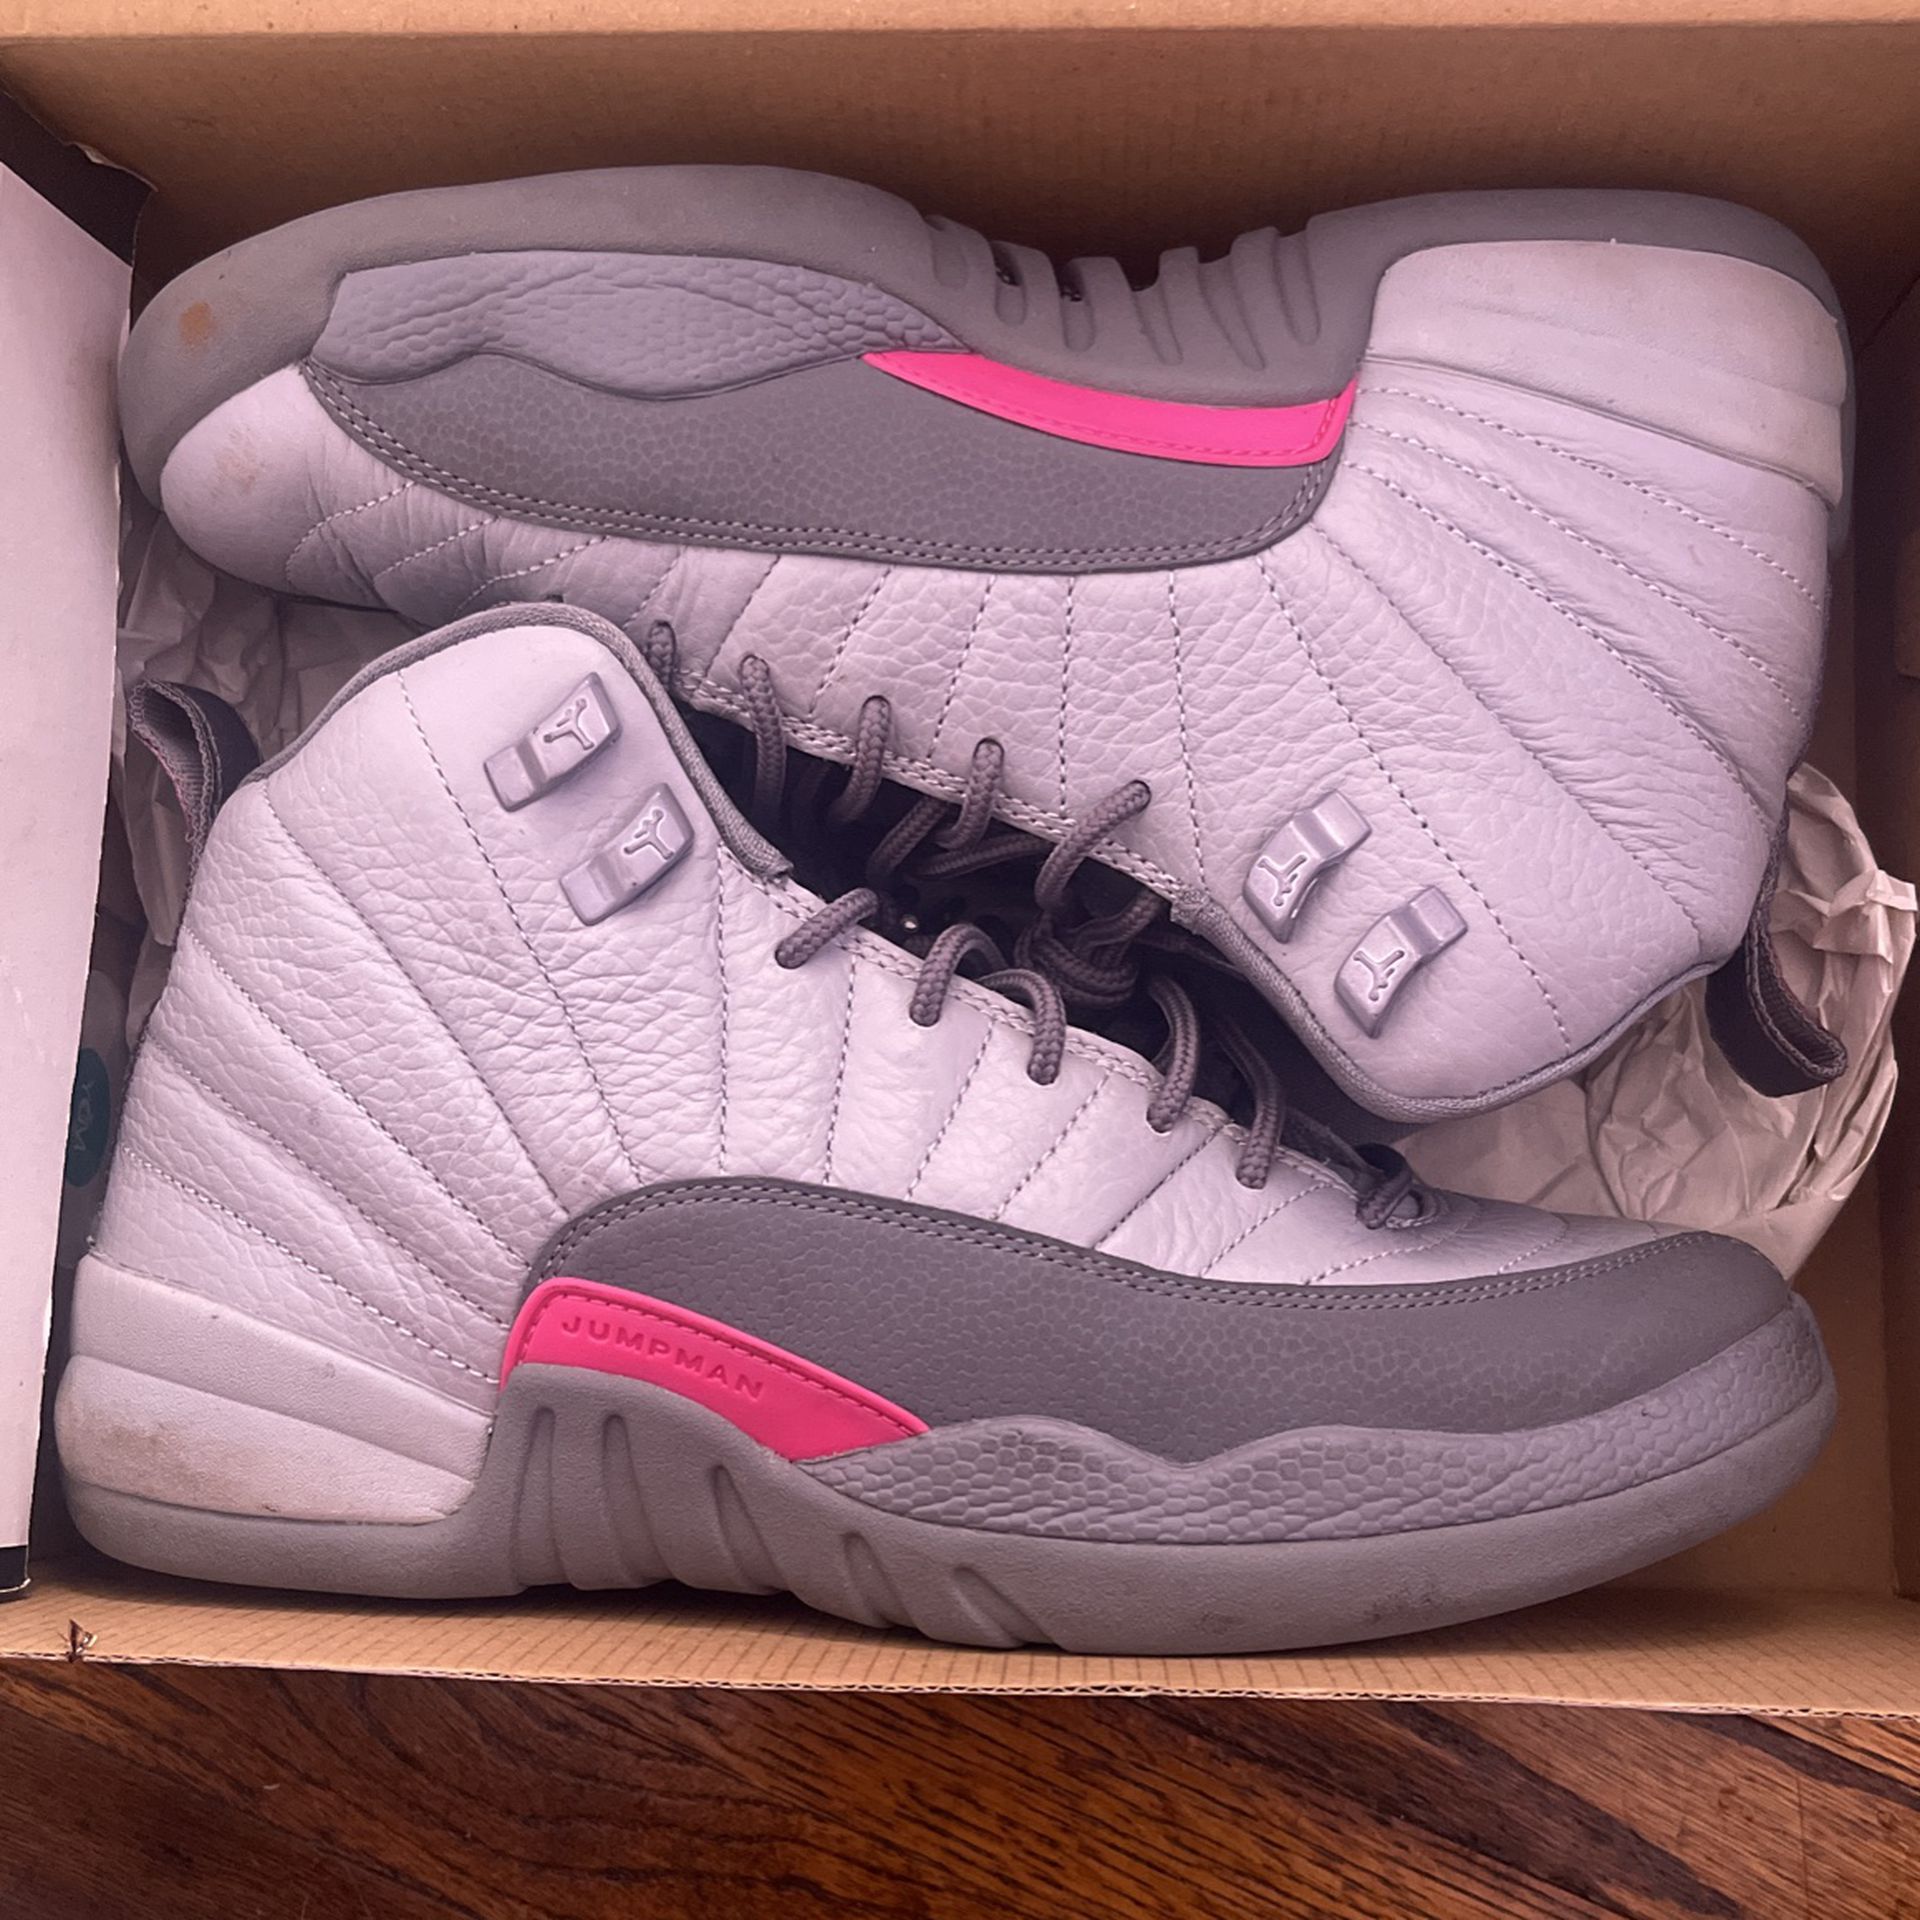 Jordan 12s Gray And Pink 